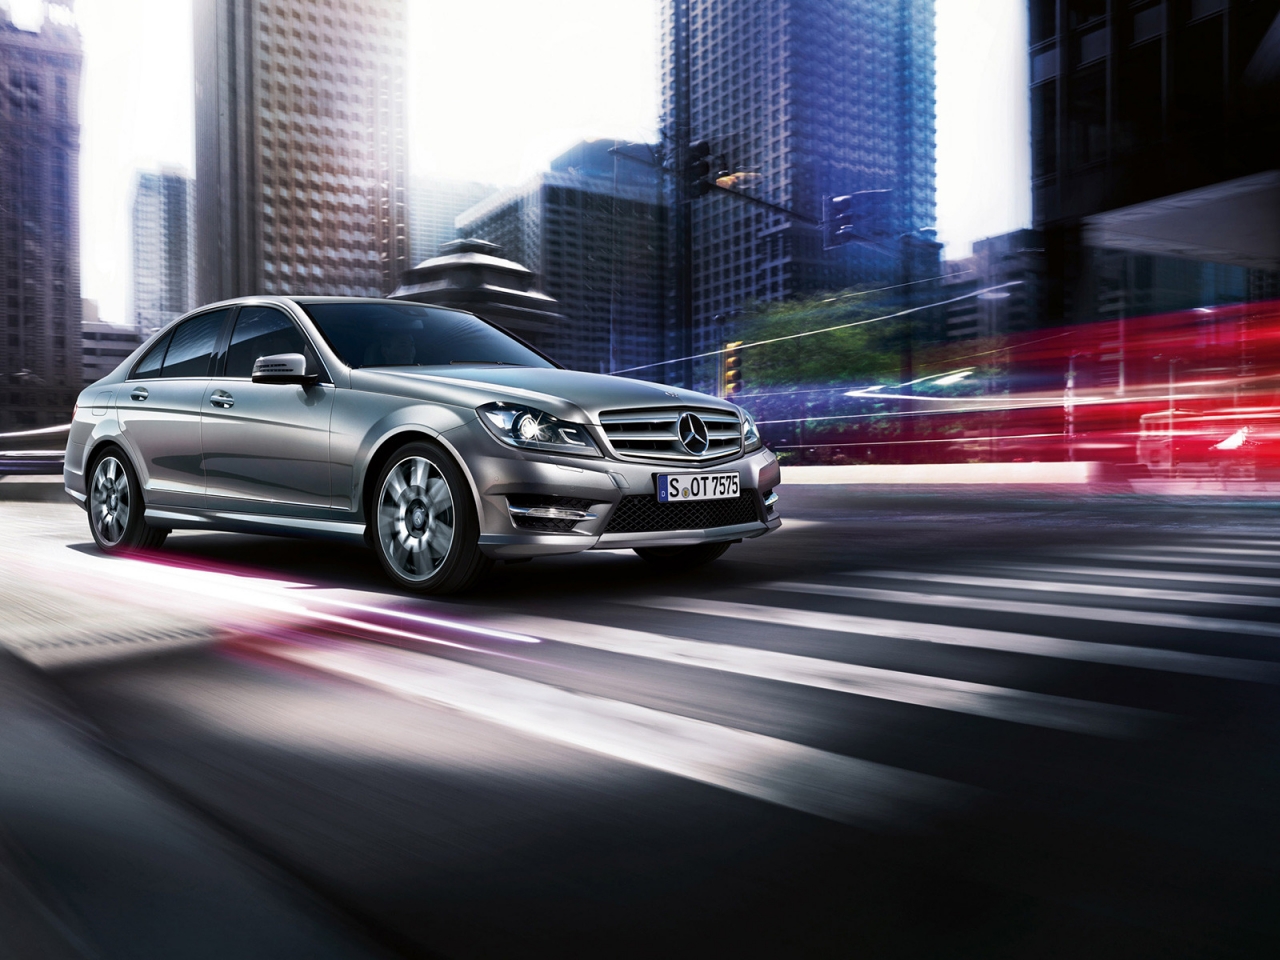 2013 Mercedes-Benz C Class for 1280 x 960 resolution